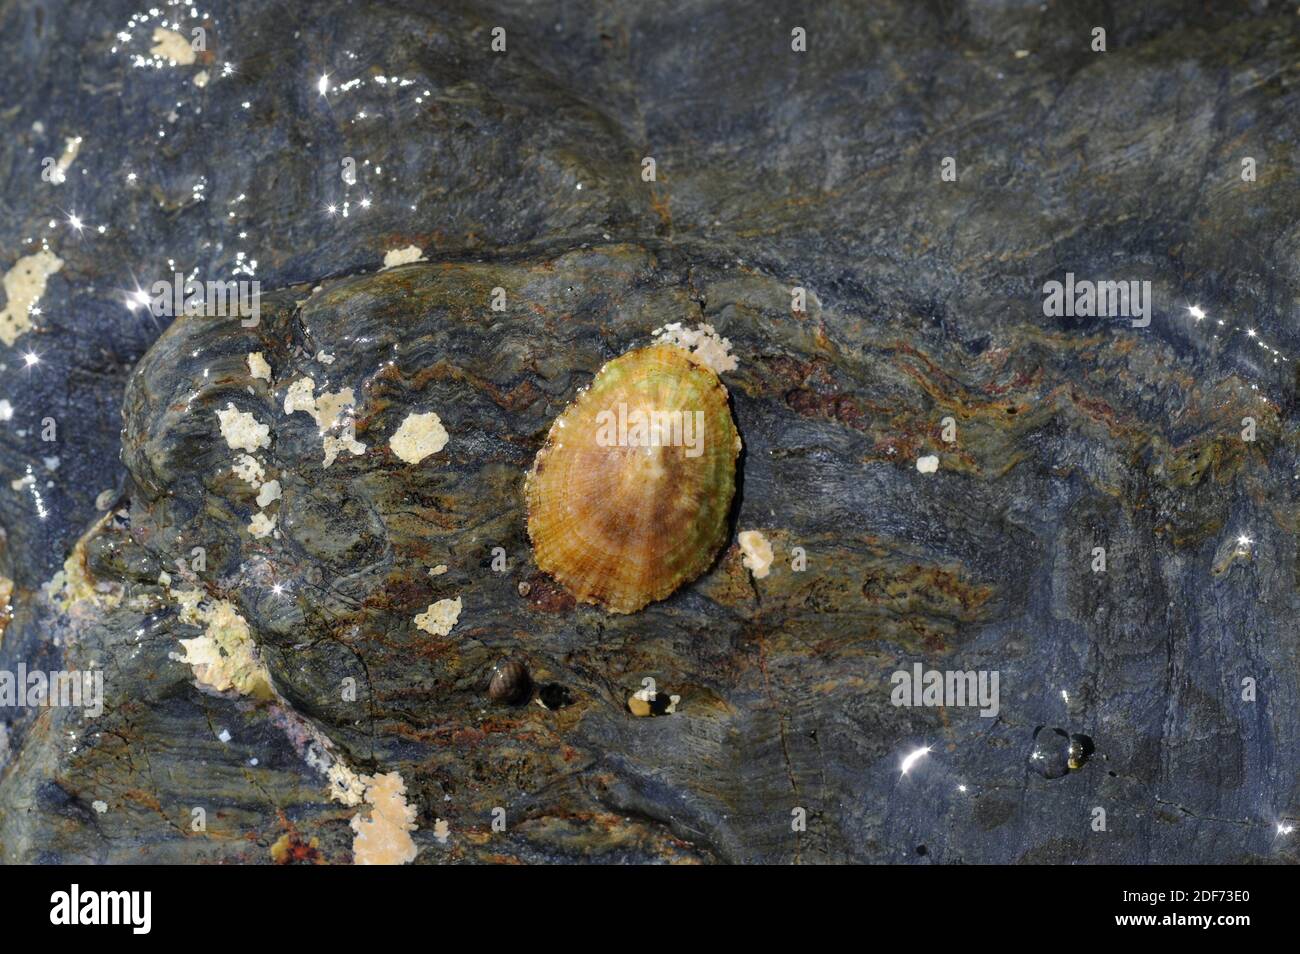 Mediterranean limpet (Patella coerulea) is a marine mollusk. This photo was taken in Cap Ras, Girona province, Catalonia, Spain. Stock Photo